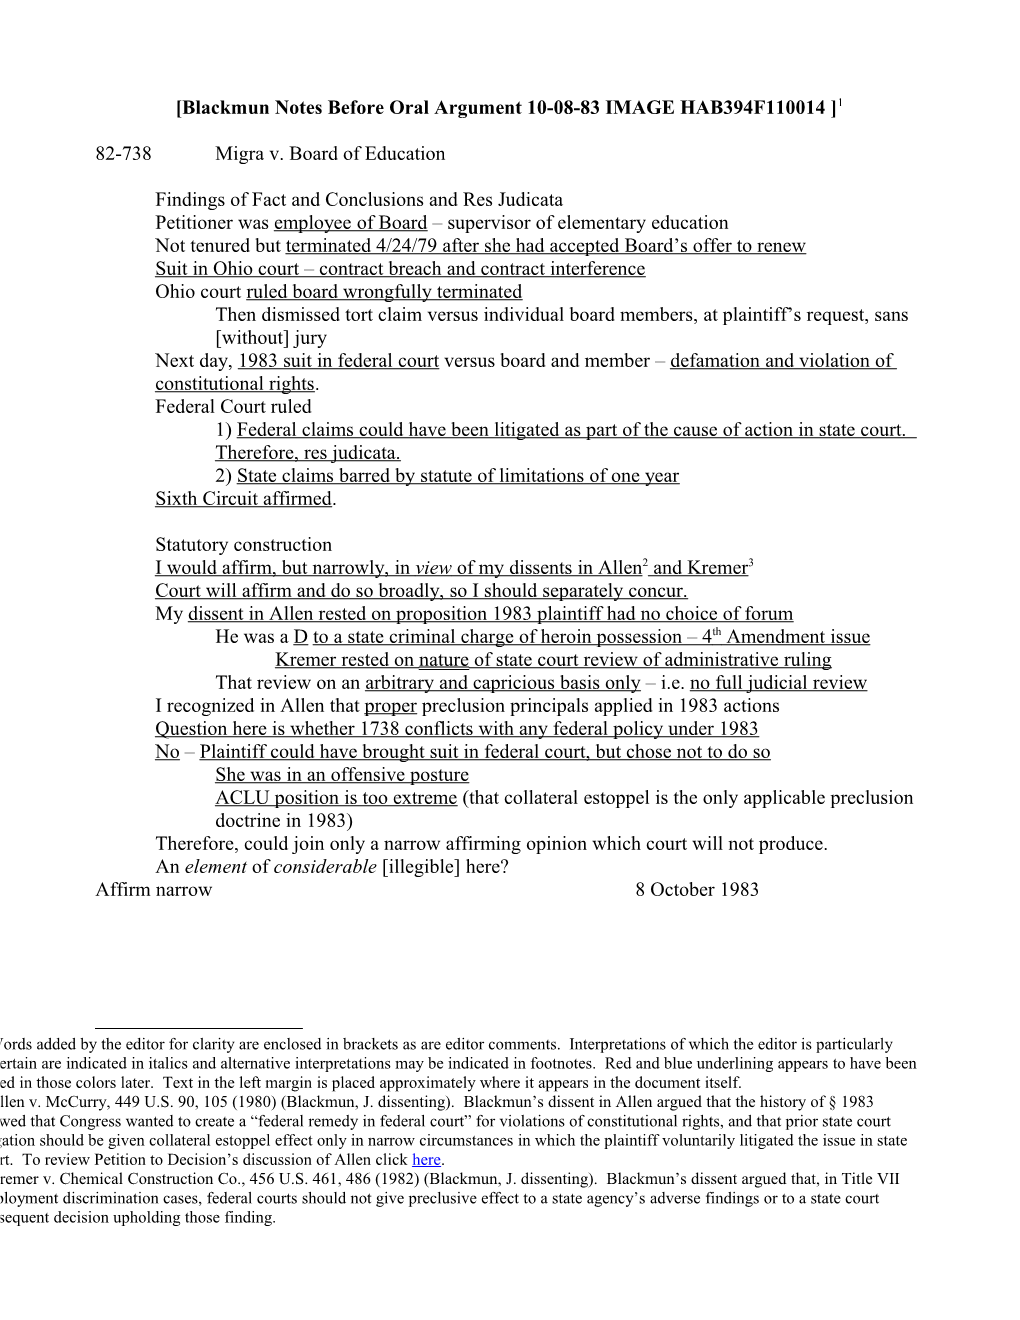 Blackmun Notes Before Oral Argument 10-08-83 IMAGE HAB394F110014 1